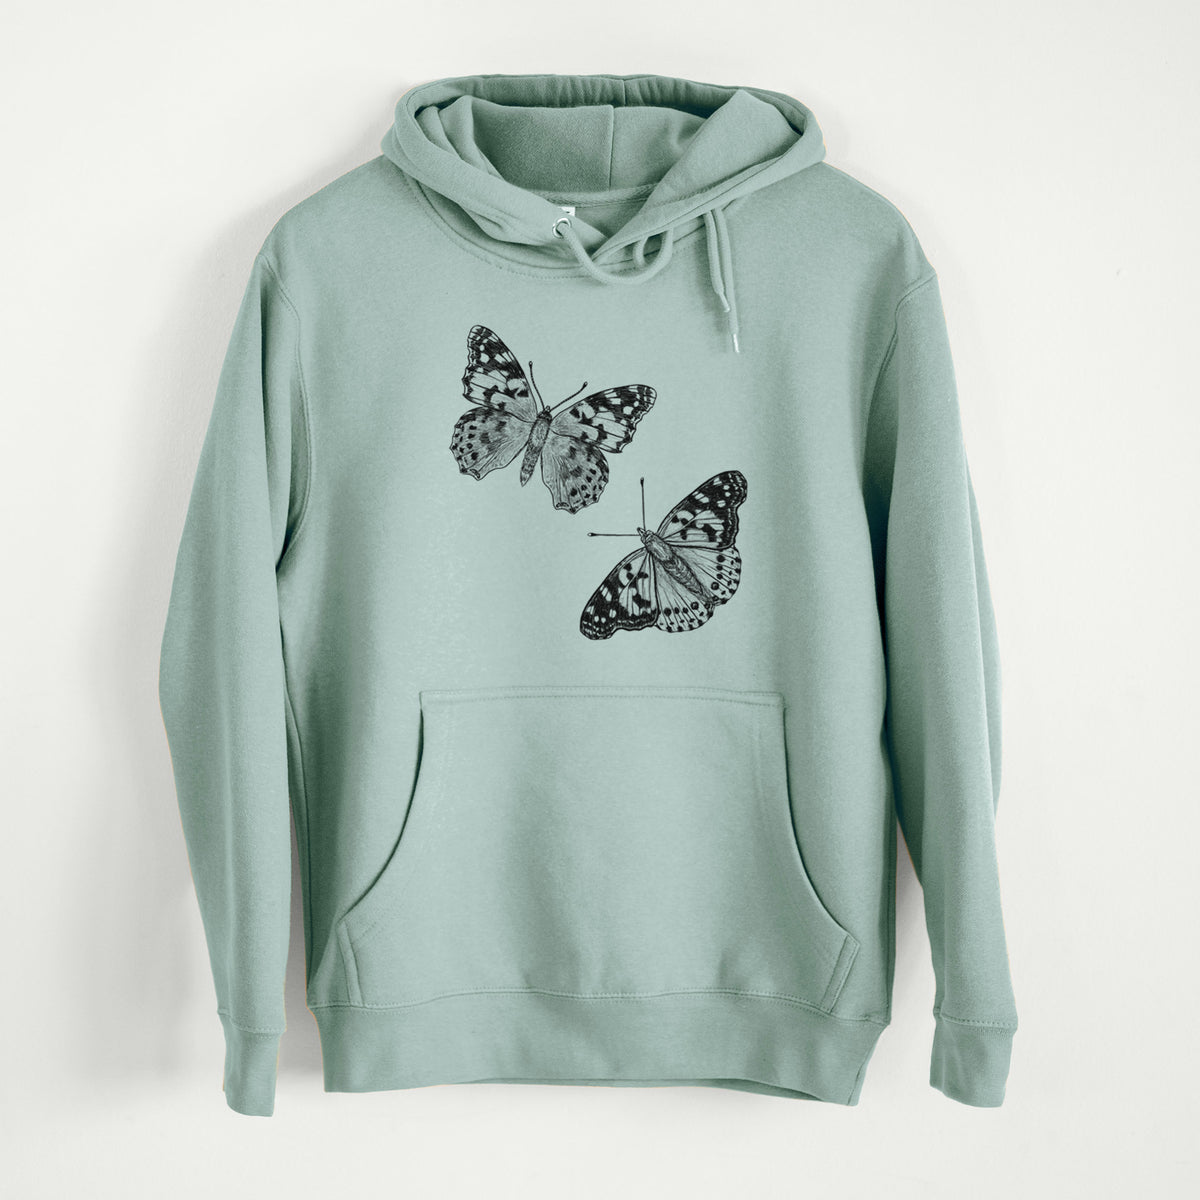 Painted Lady Butterflies  - Mid-Weight Unisex Premium Blend Hoodie